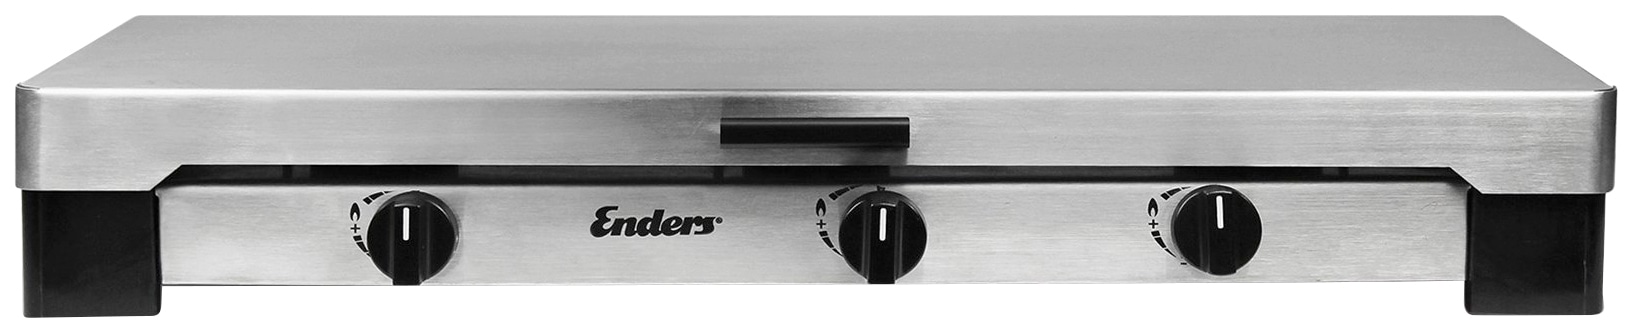 Enders® Gaskocher »Brisbane 3 Z«, Edelstahl, 59 cmx32 cm, BxLxH: 59x32x9 cm, 3 x 2,3 kW Brenner